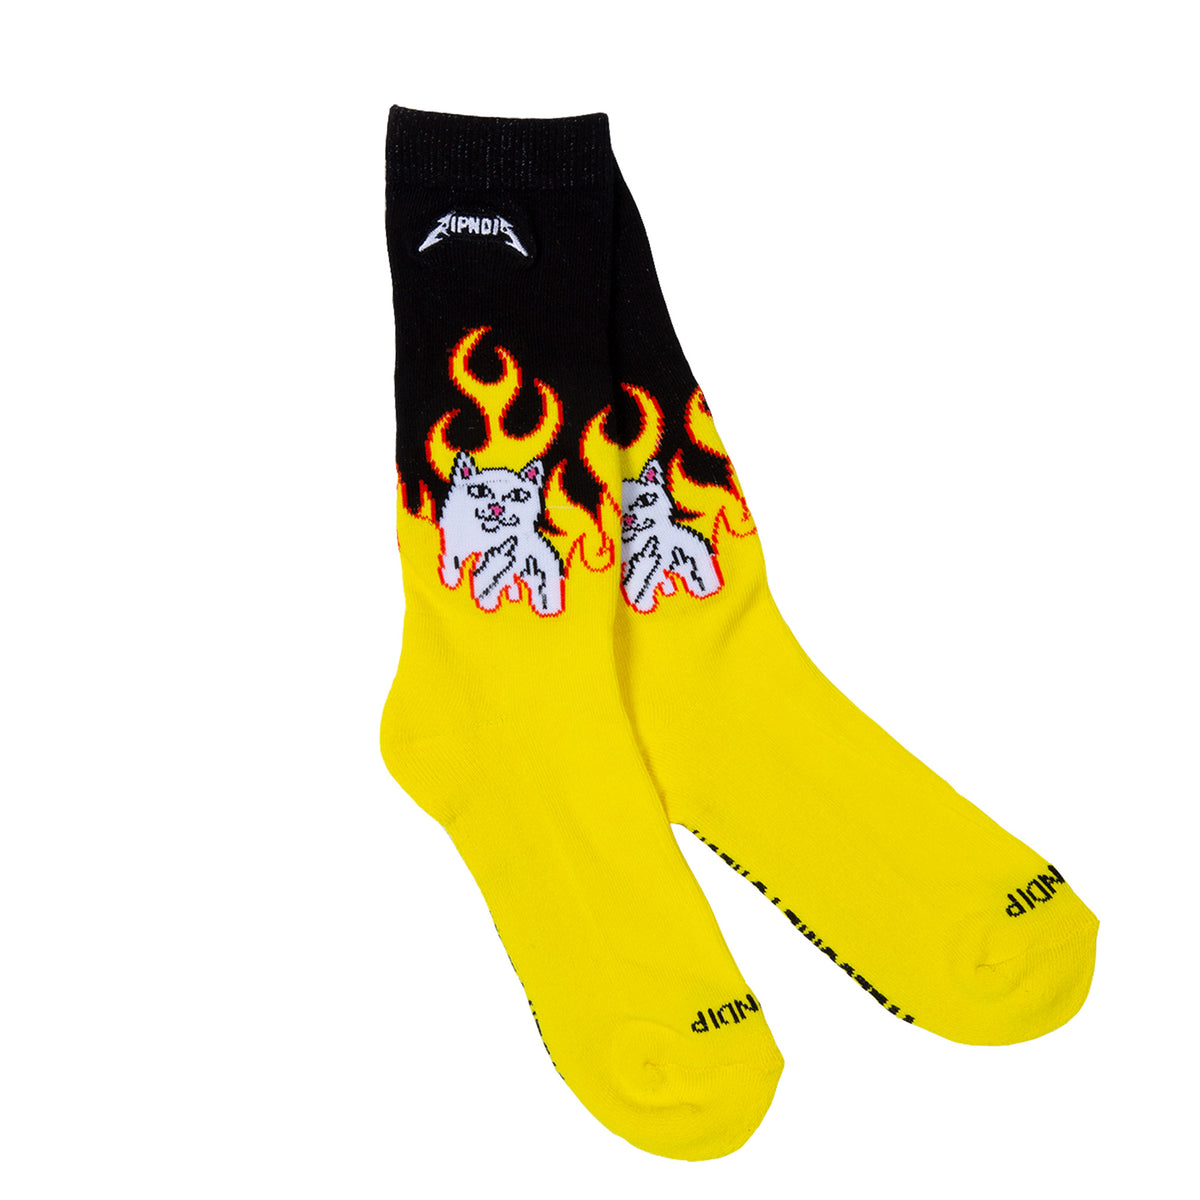 Welcome To Heck Socks (Black / Yellow) - Ripndip – RIPNDIP ONLINE